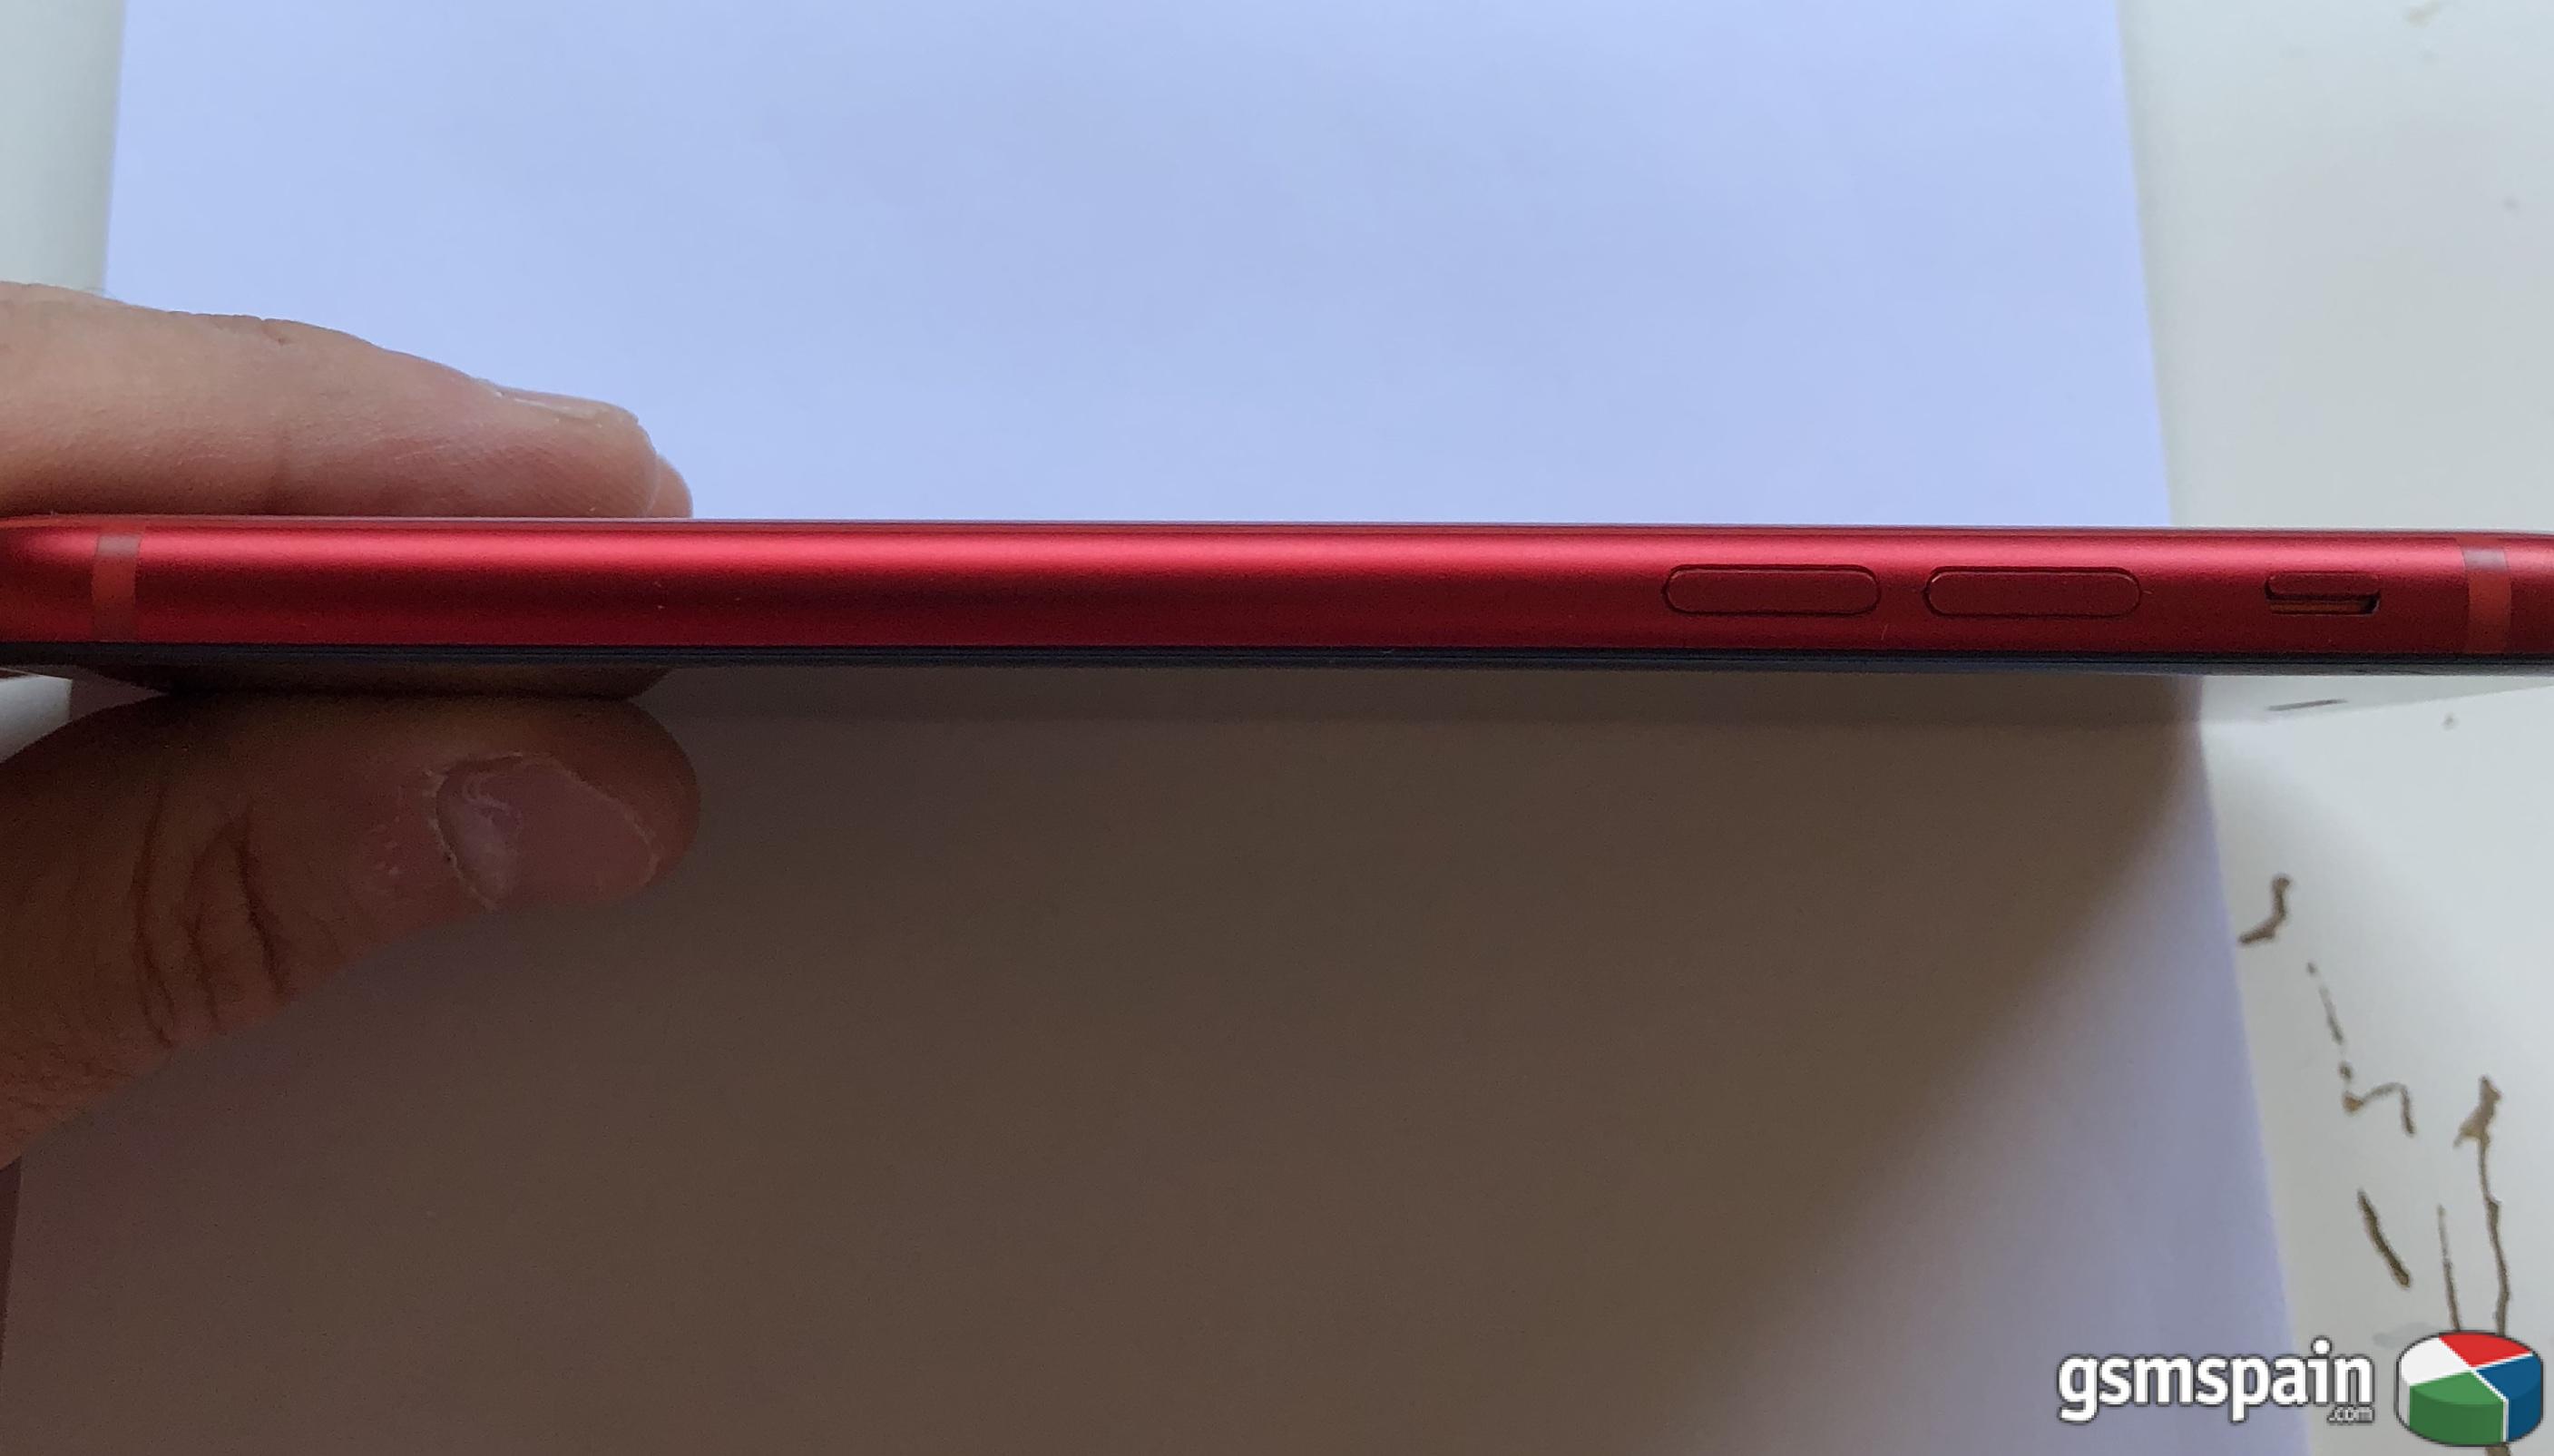 [VENDO] Iphone 8 64gb red product (rojo)